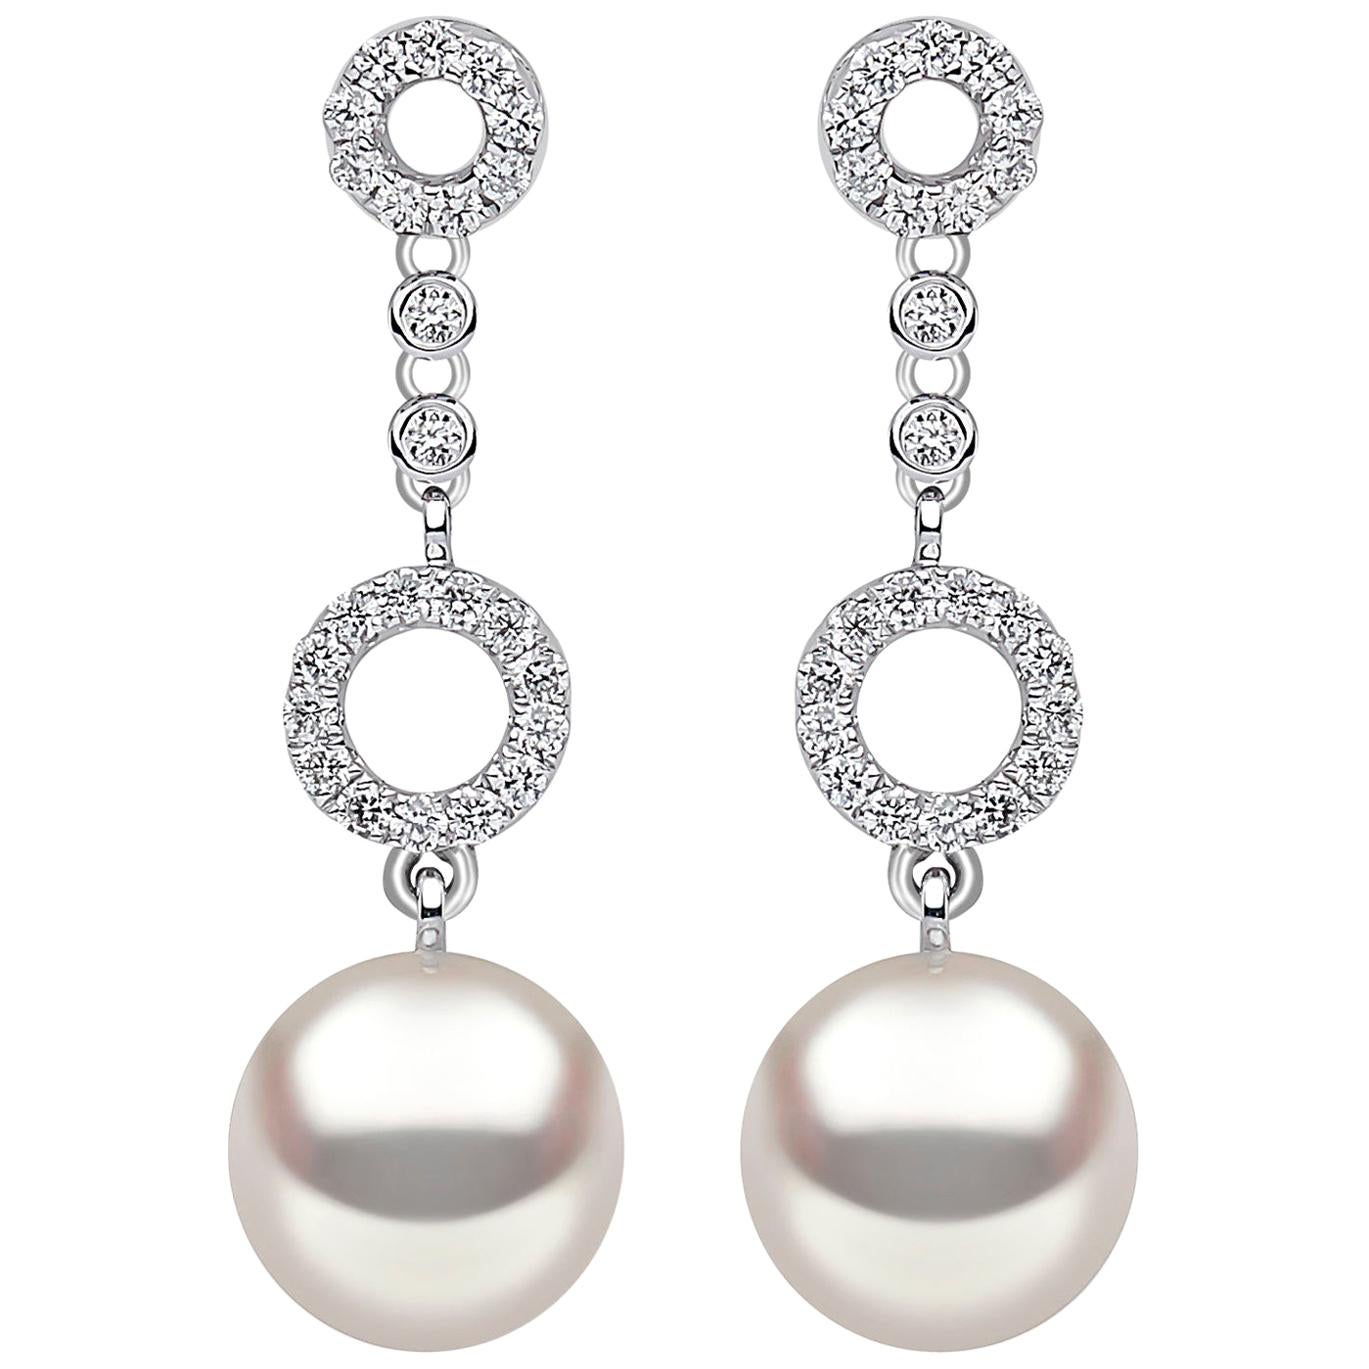 Yoko London Akoya Pearl and Diamond Earrings Set in 18 Karat White Gold